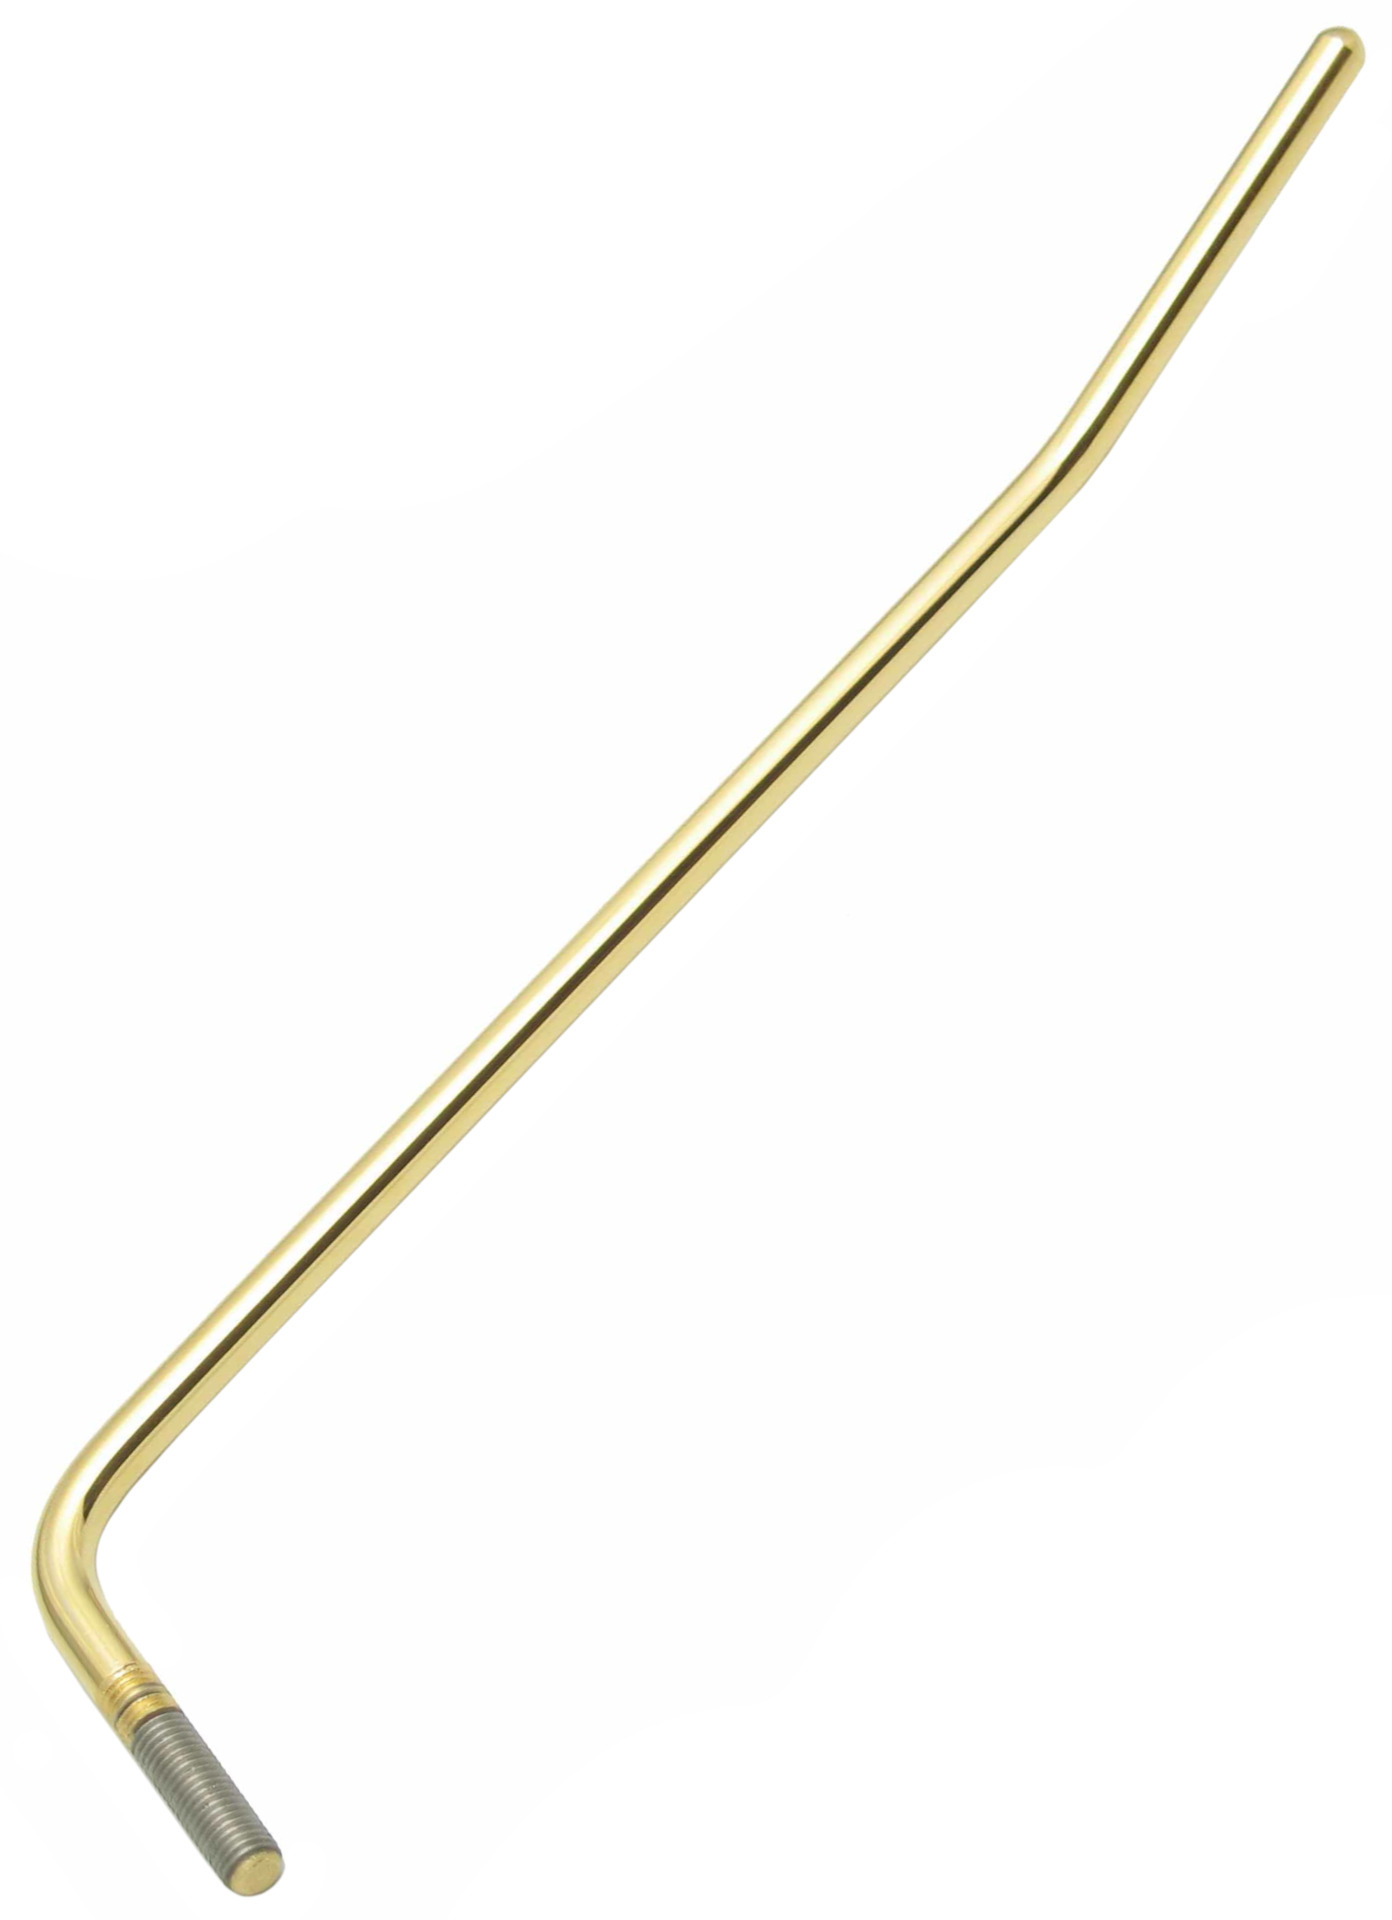 Kahler Spare Parts 8537 - Bass Tremolo Arm, Lefthand - Gold